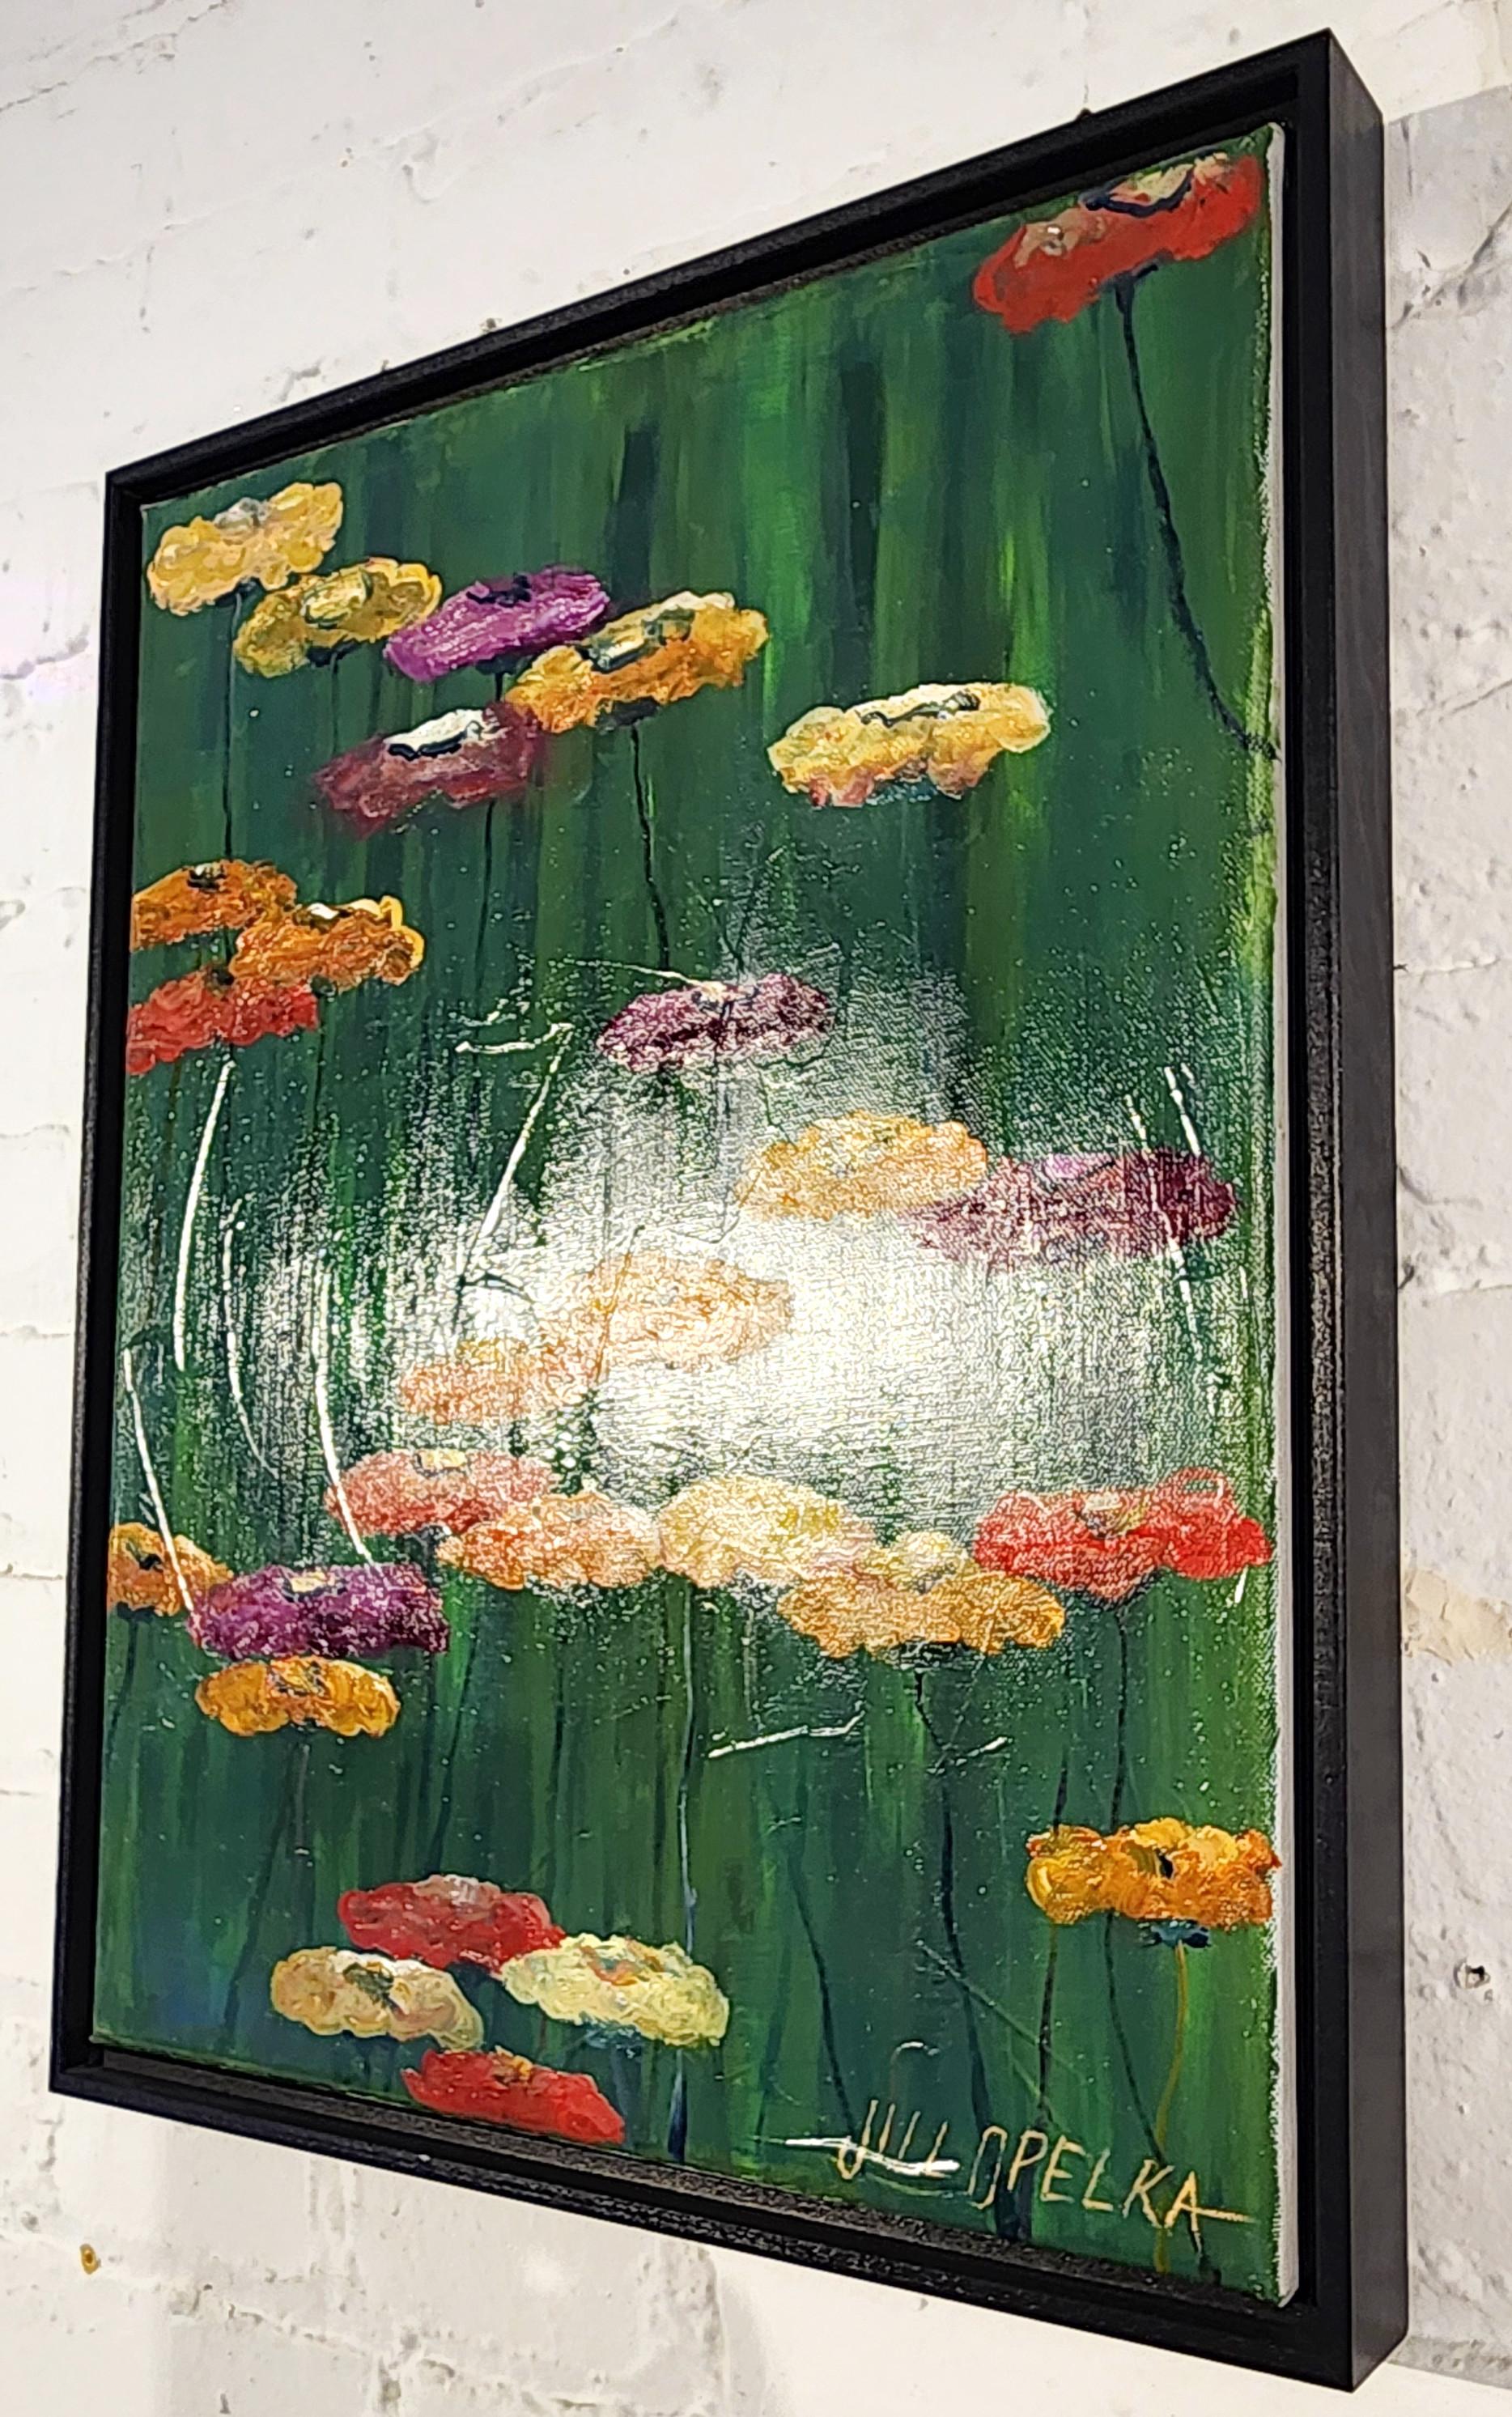 Blüten (Blumen, gesättigt, grün, gelb, lila, rosa, rot) – Painting von Jill Opelka